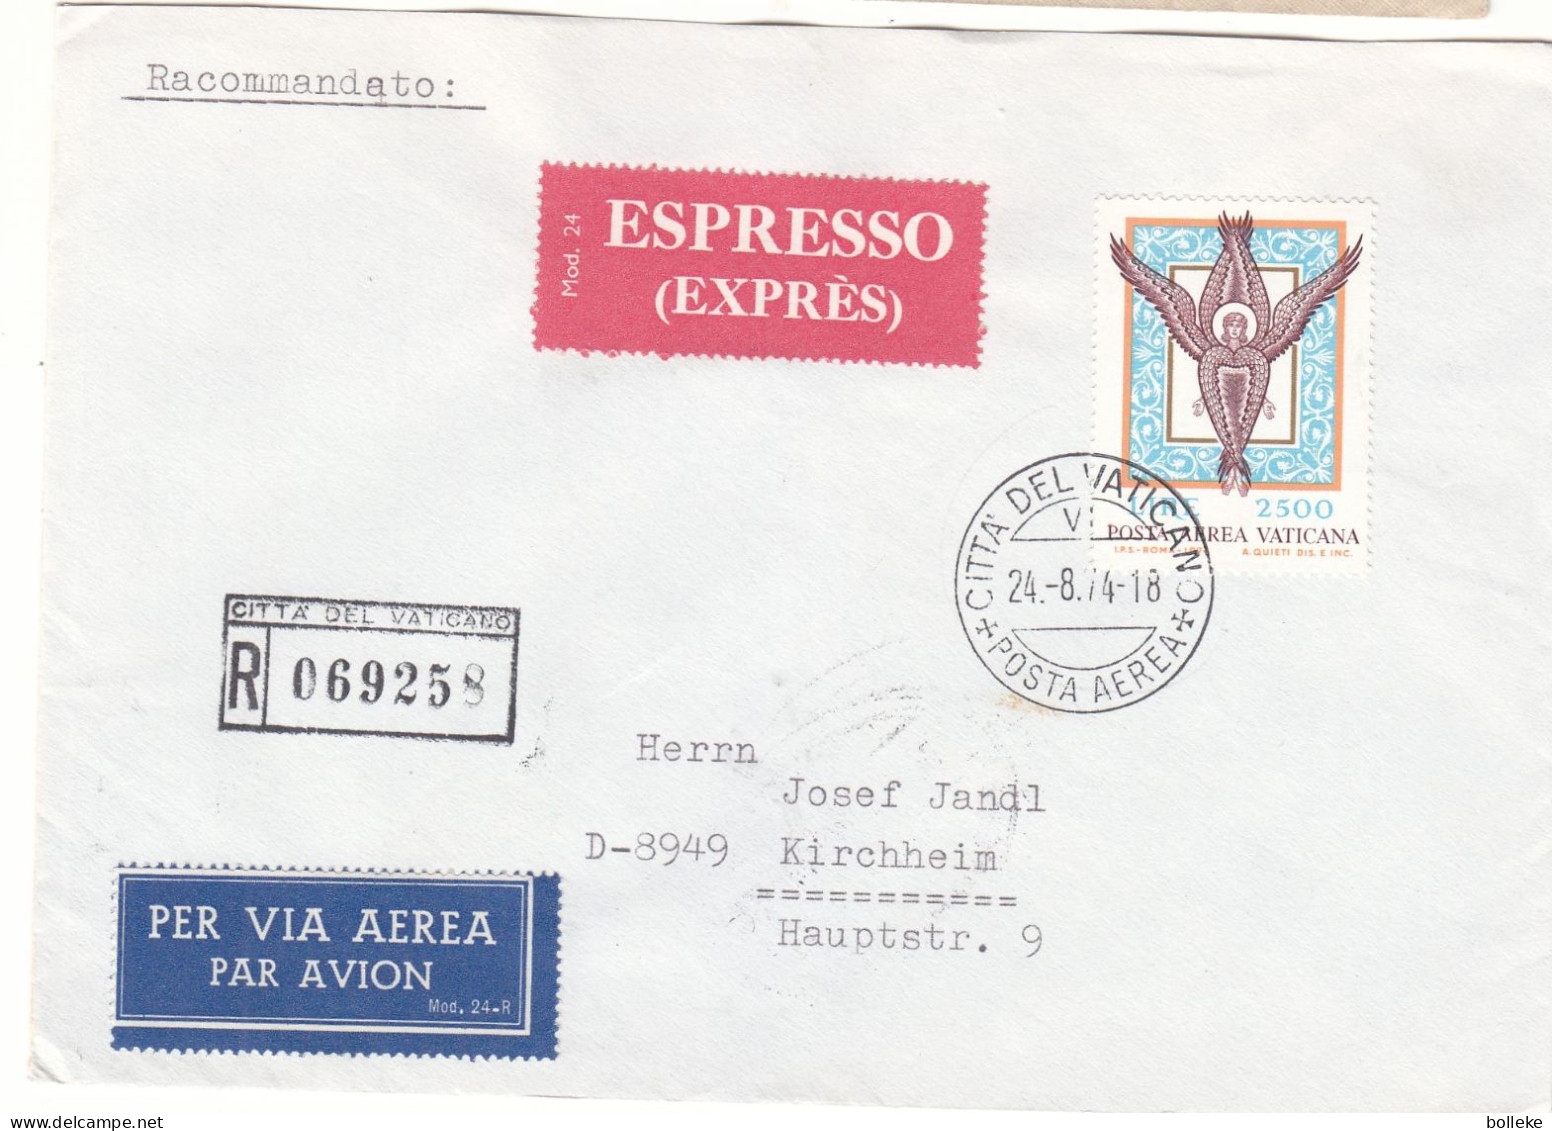 Vatican - Lettre Recom Exprès De 1974 - Oblit Citta Del Vaticano - Exp Vers Kirchheim - Cachet Train Stuttgart München - - Storia Postale